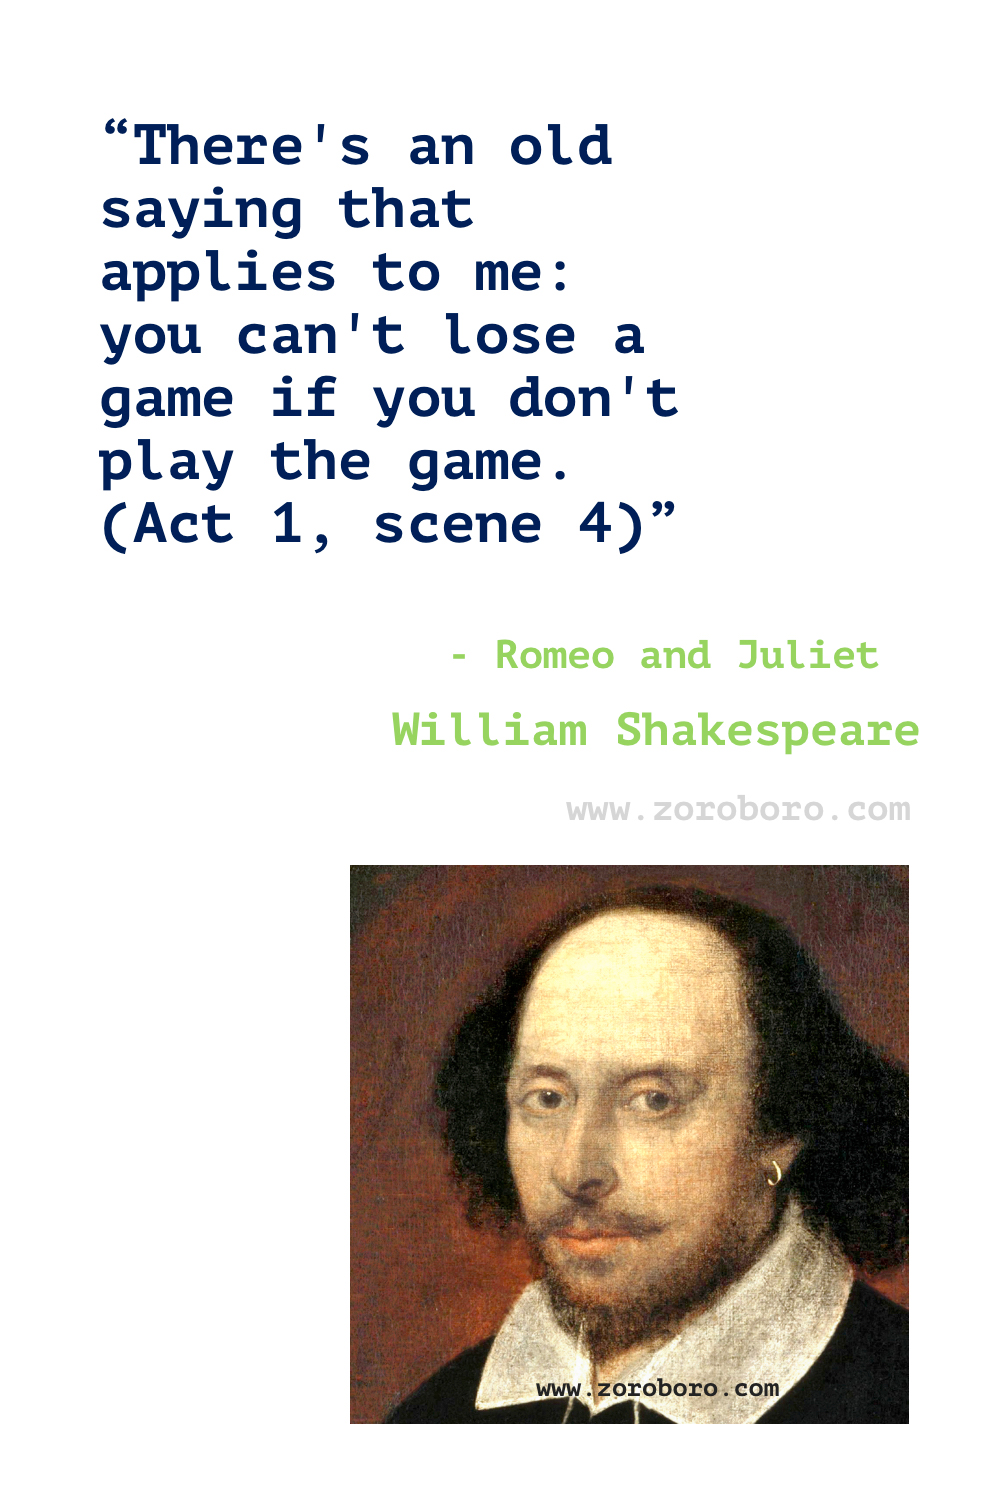 William Shakespeare Quotes, Romeo and Juliet Quotes, Hamlet Quotes, Macbeth Quotes & more. William Shakespeare Play Quotes, William Shakespeare Poems.